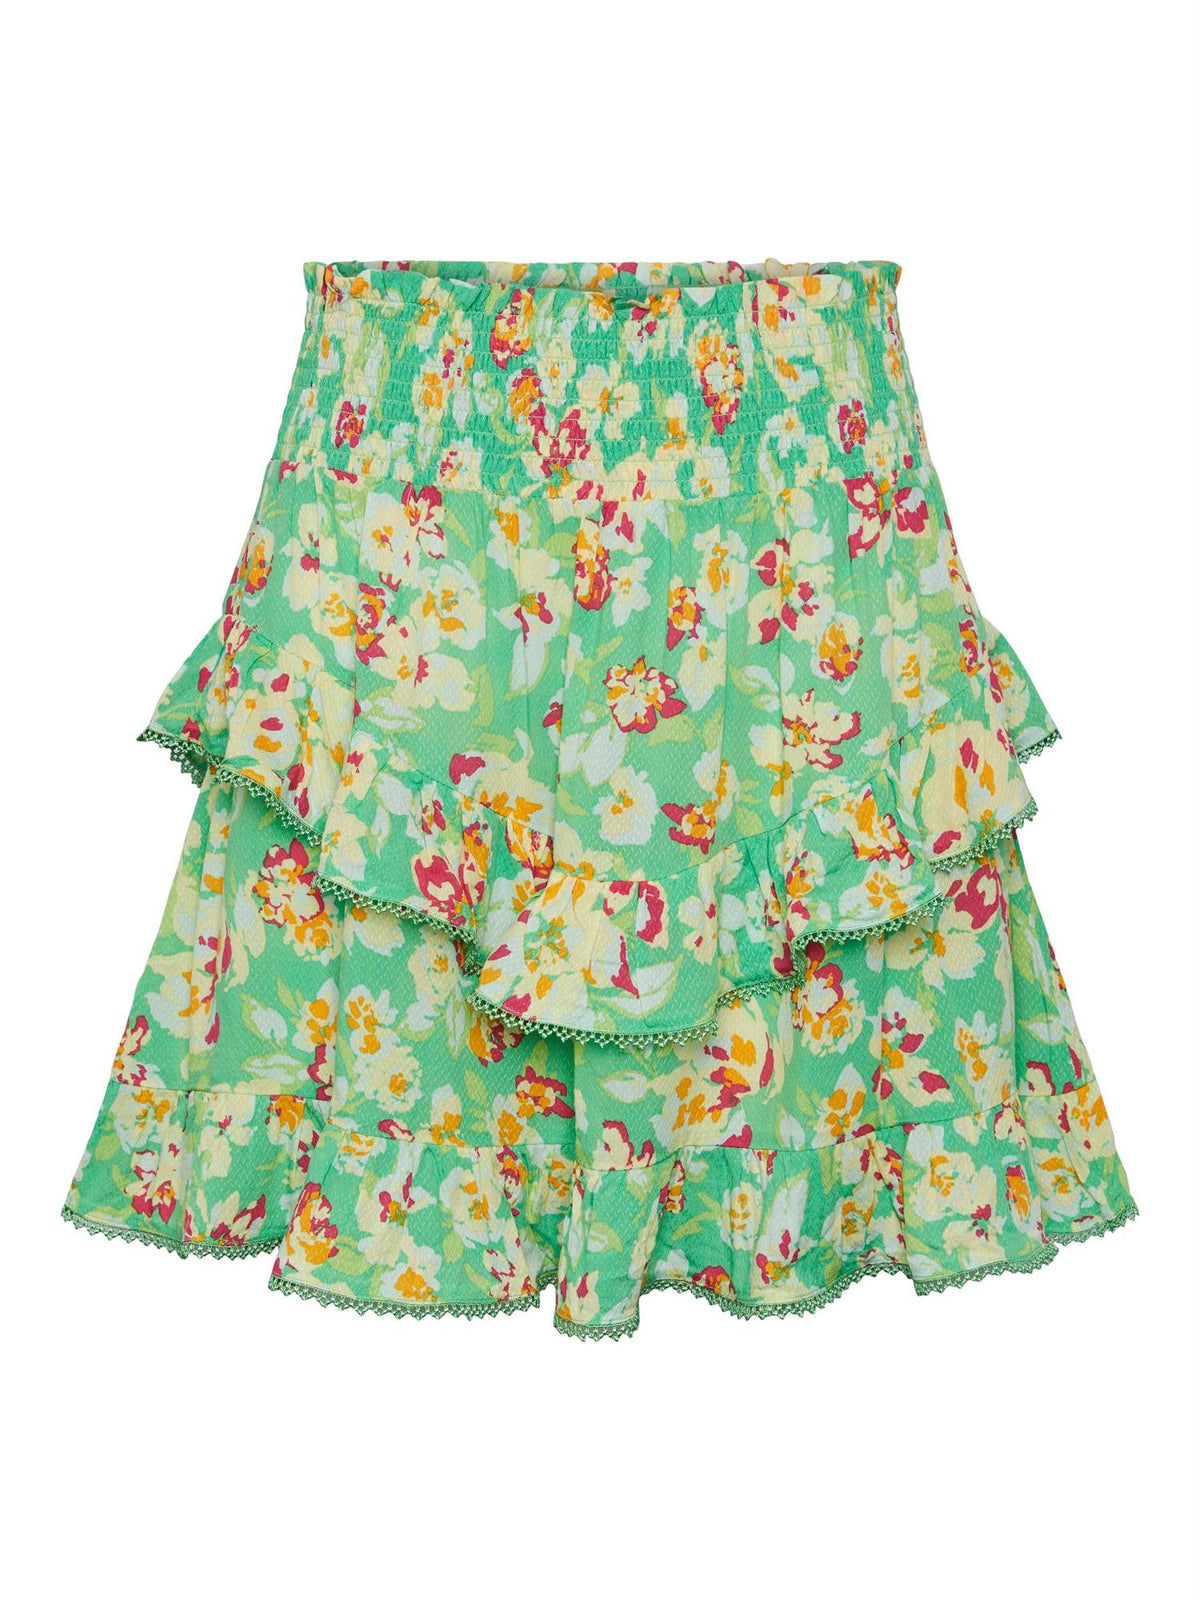 Suria hw skirt s Poison Green/Uria Print